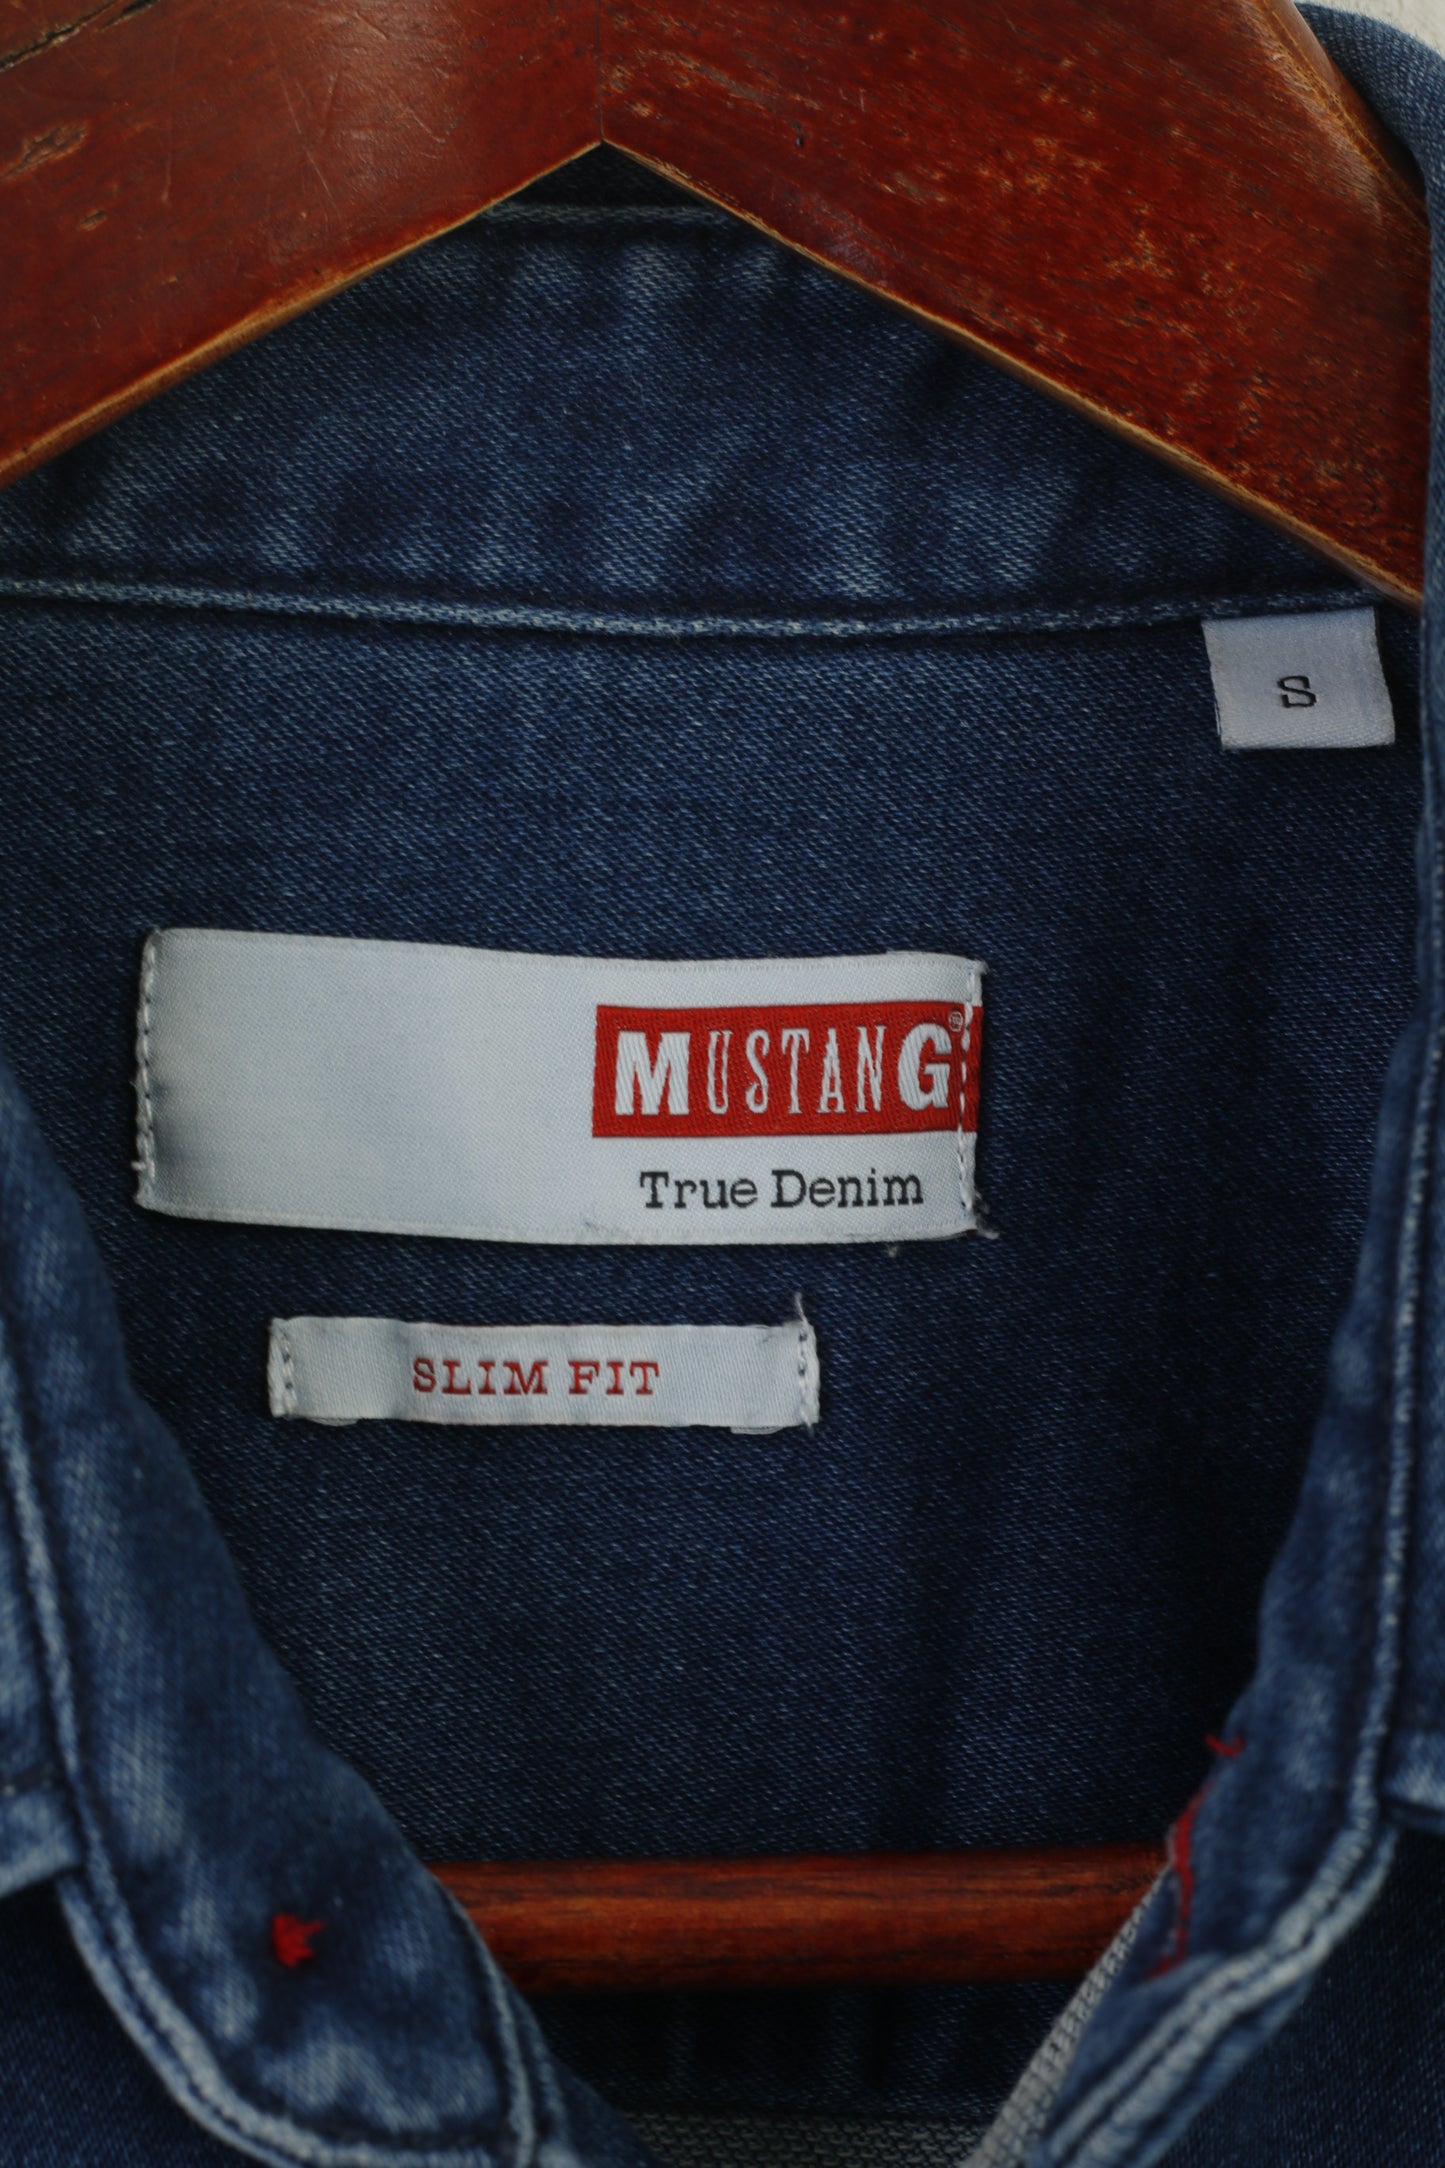 Mustang Men S Casual Shirt Blue Denim Slim Fit Stretch Long Sleeve Vintage Top